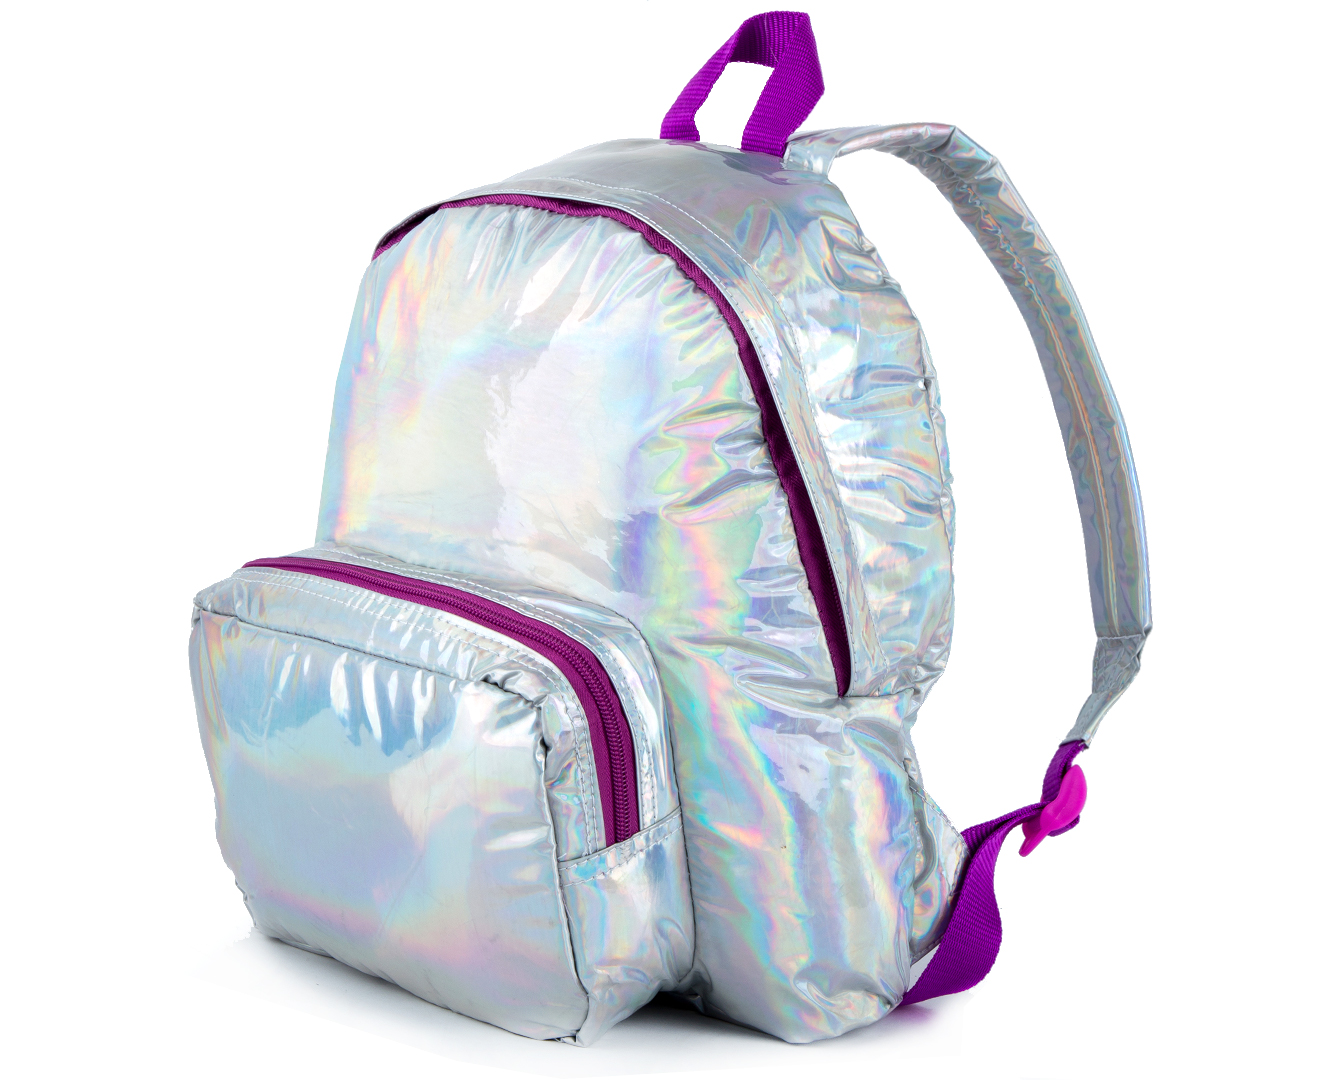 The Trendy Backpack - Rainbow Hologram | Mumgo.com.au